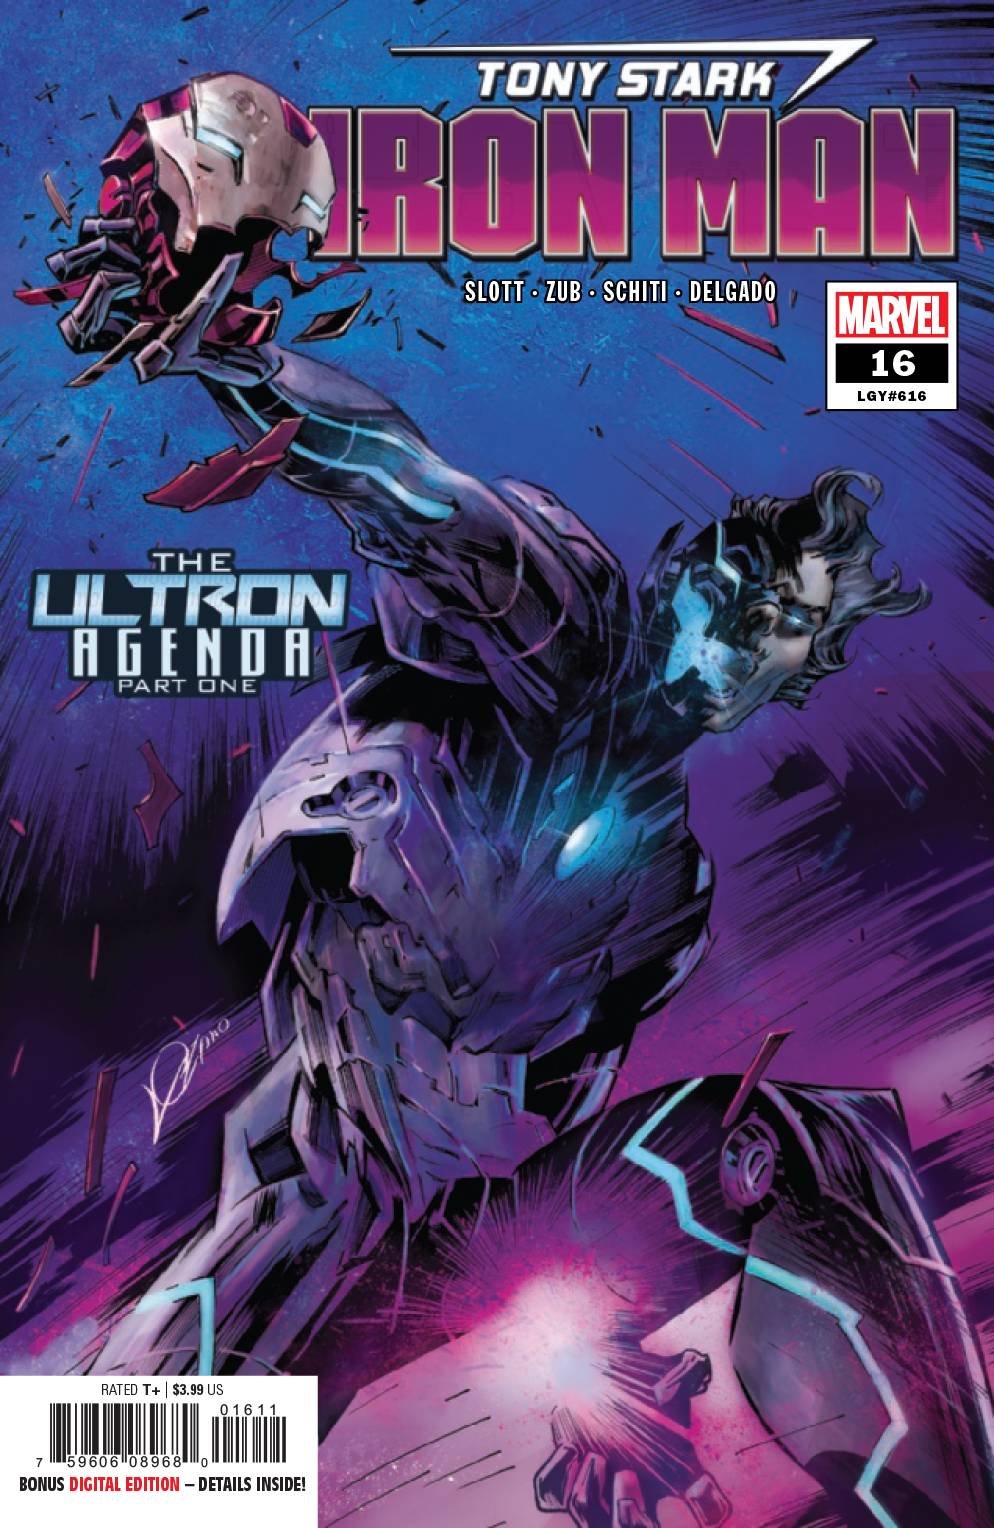 Tony Stark Iron Man #16 (2018)